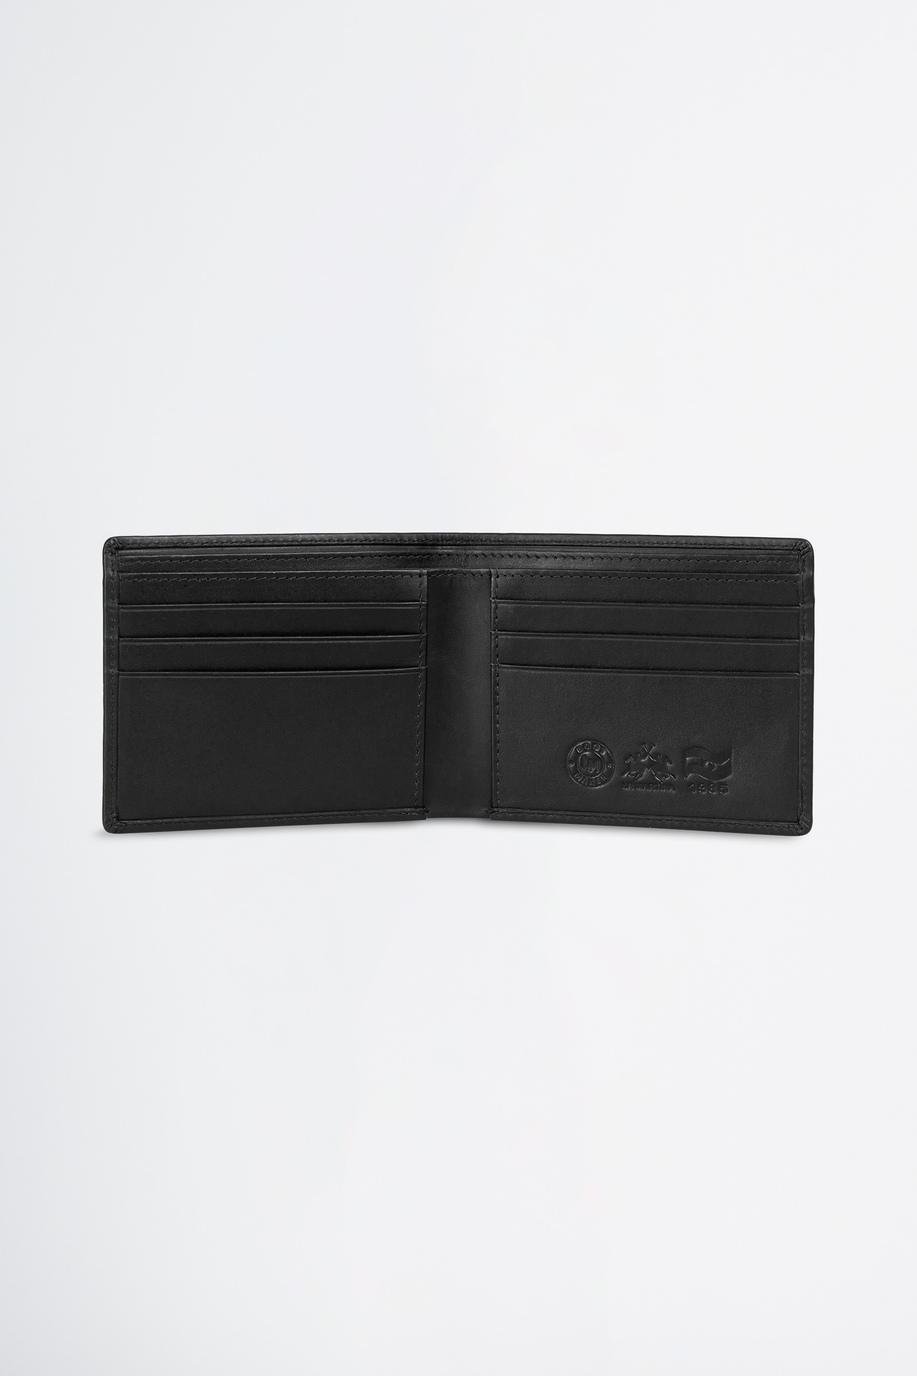 Leather wallet - Accessories | La Martina - Official Online Shop